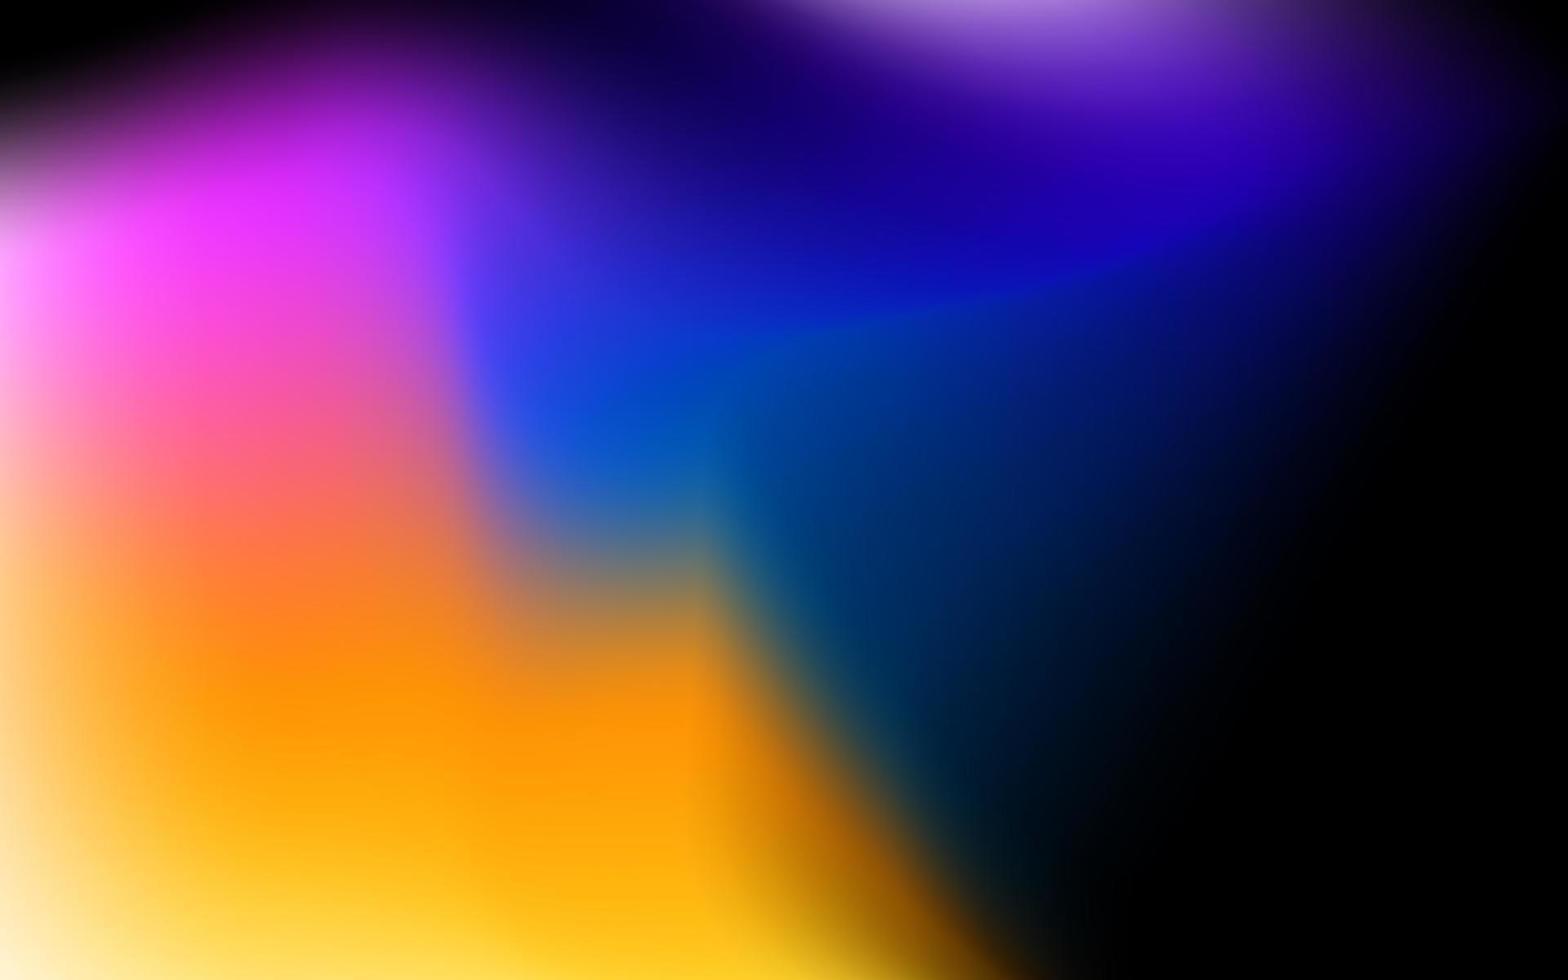 abstrato colorido azul, amarelo, laranja preto malha holográfica fundo de textura ondulada. vetor eps10